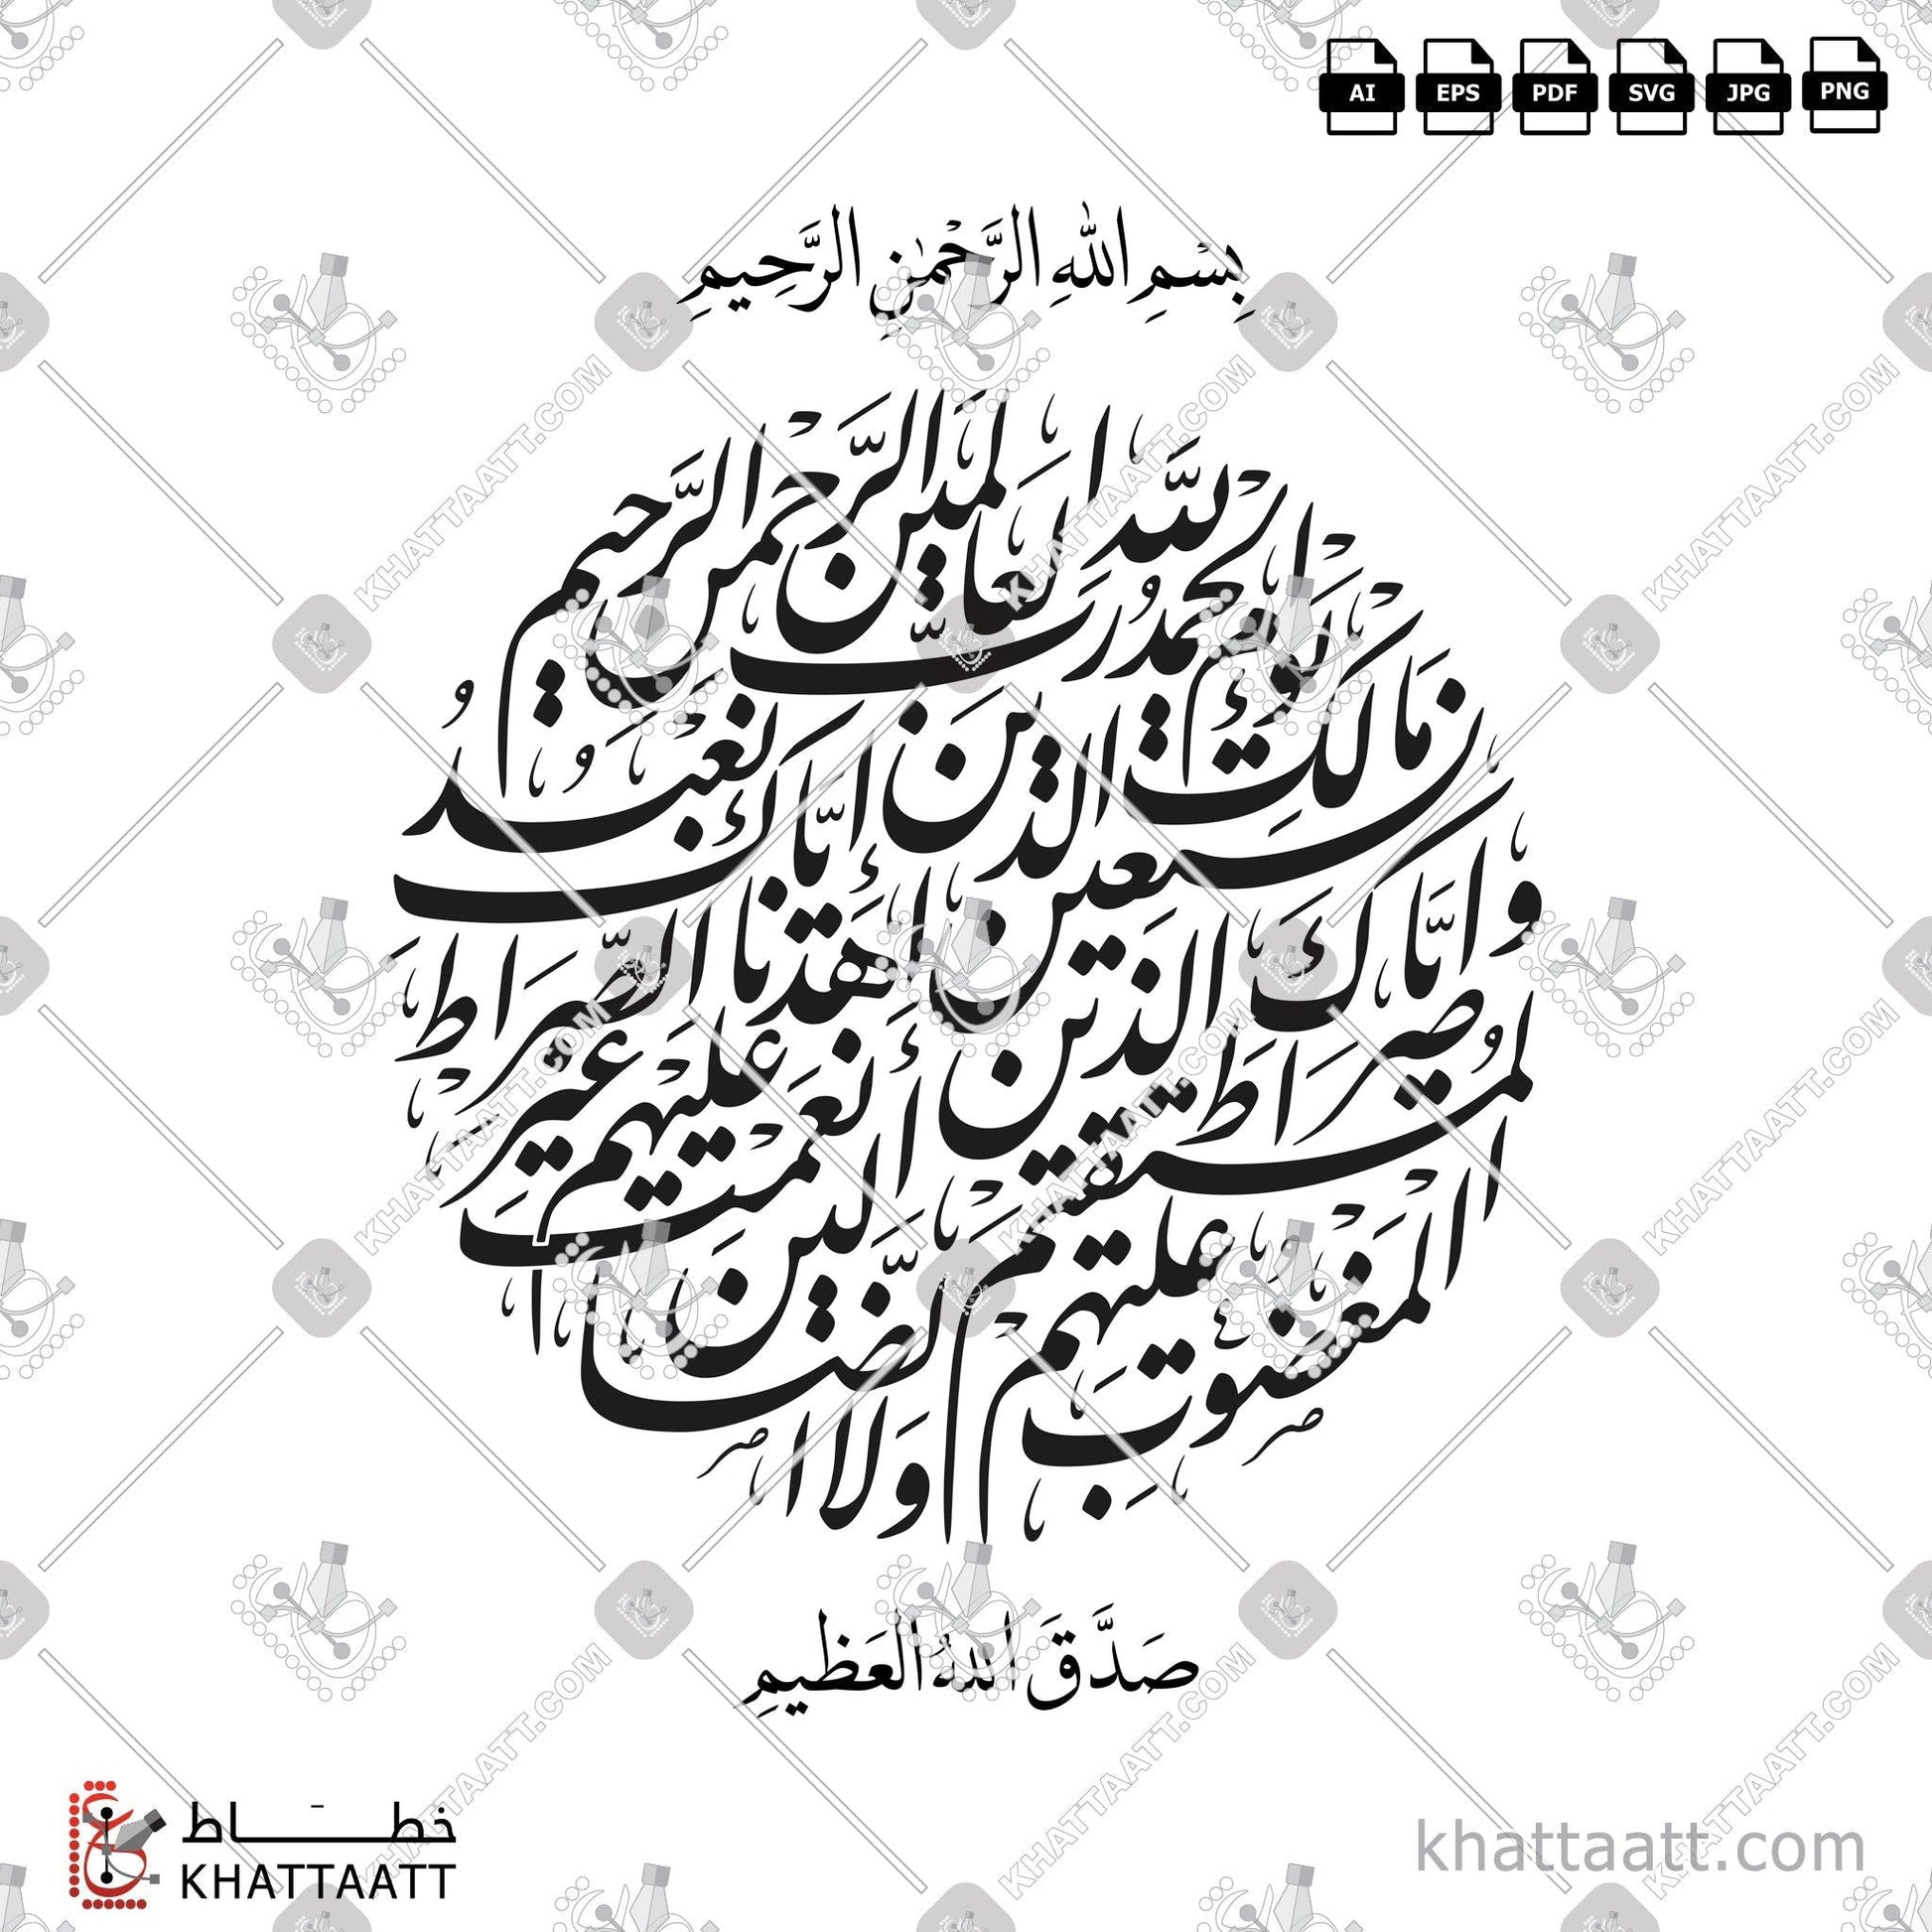 Download Arabic Calligraphy of Surat Al-Fatiha - سورة الفاتحة in Farsi - الخط الفارسي in vector and .png